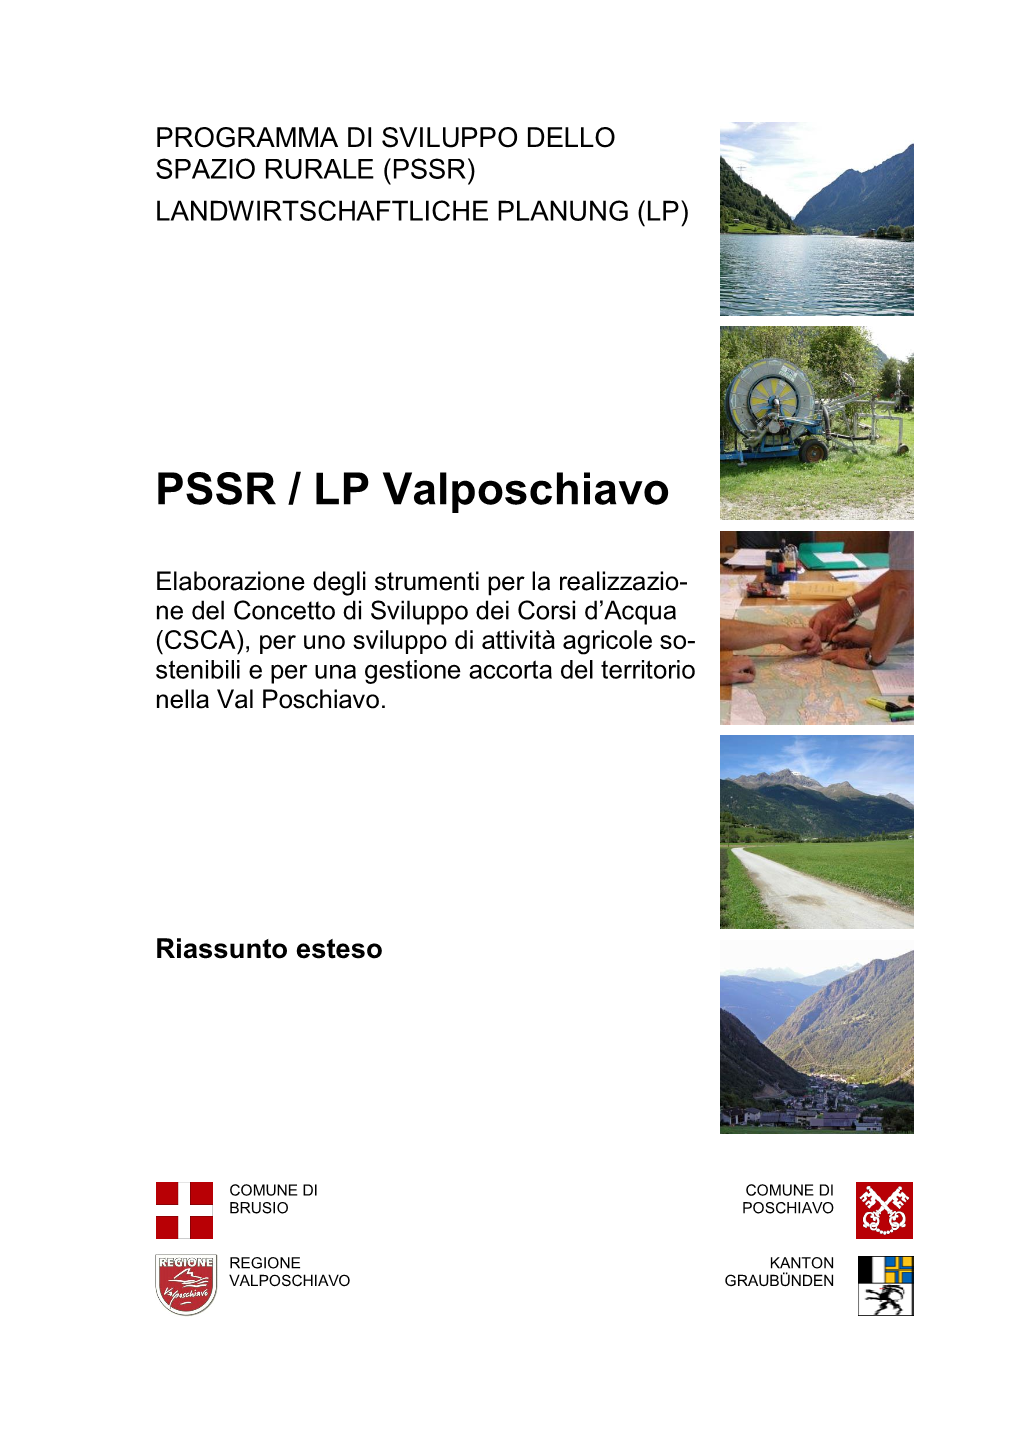 PSSR / LP Valposchiavo